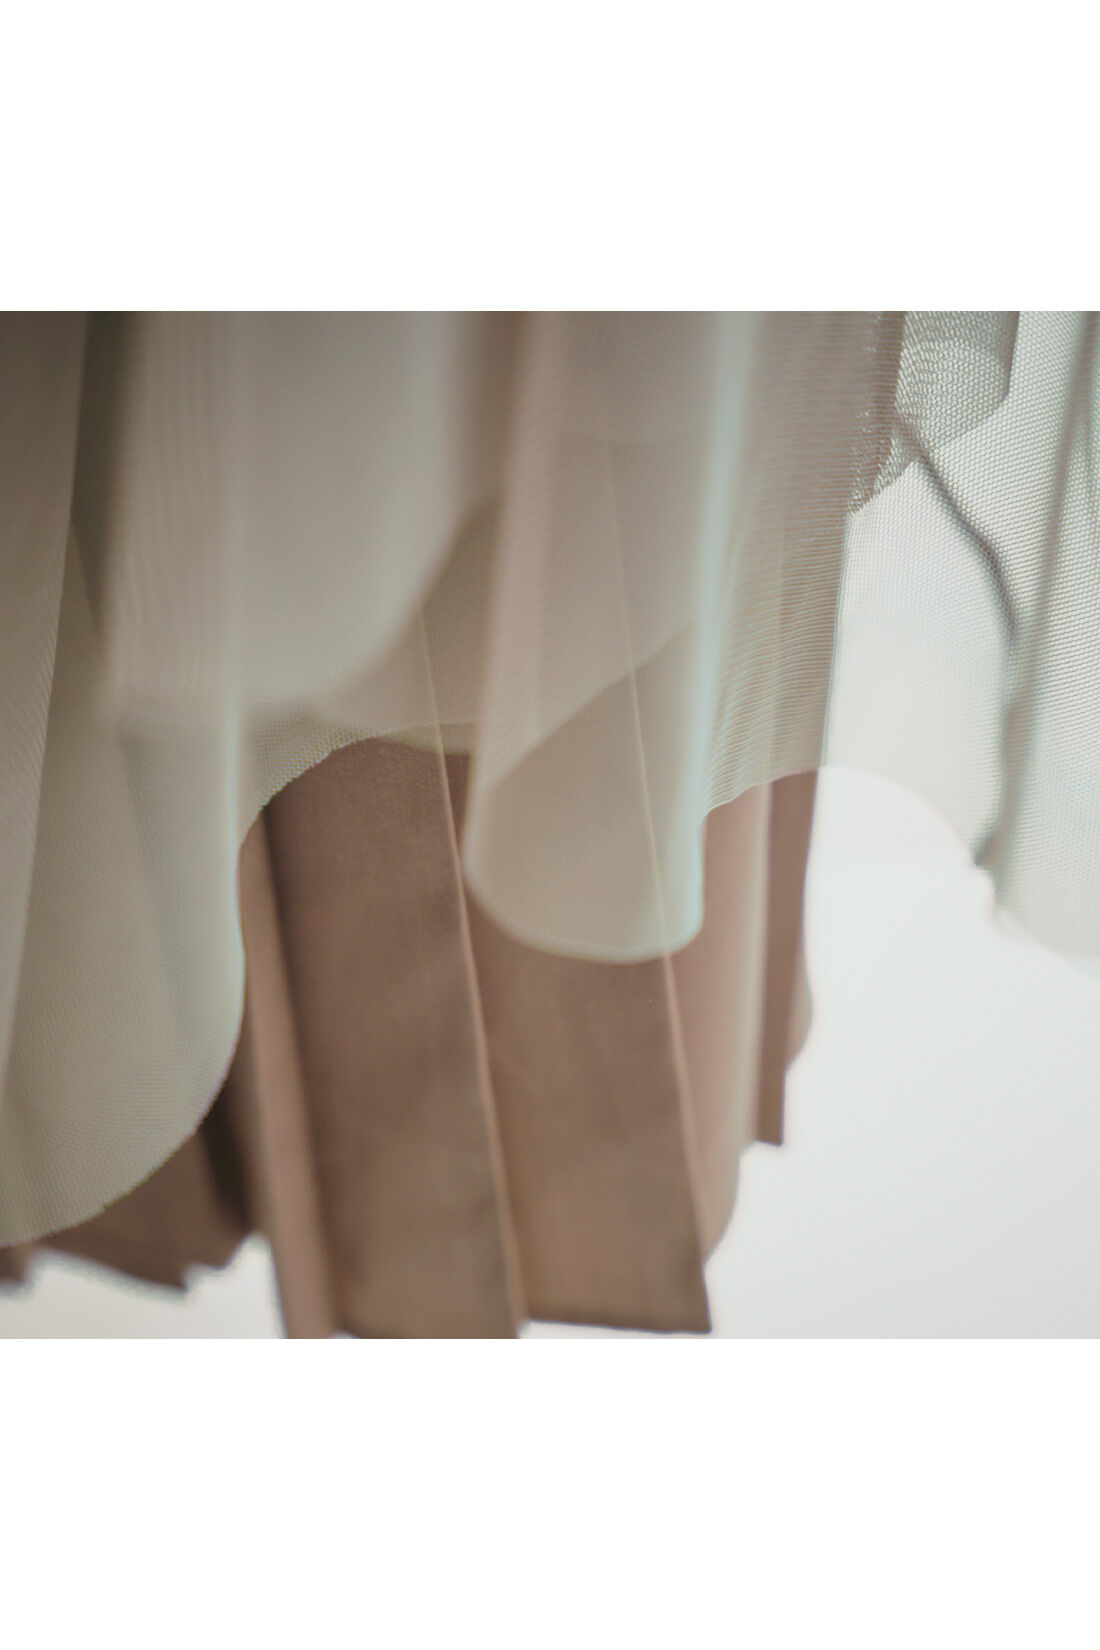 IEDIT|IEDIT[イディット]　プリーツデザインのチュールレイヤードスカート|プリーツ生地の上に、チュールを重ねたこだわりのデザイン。